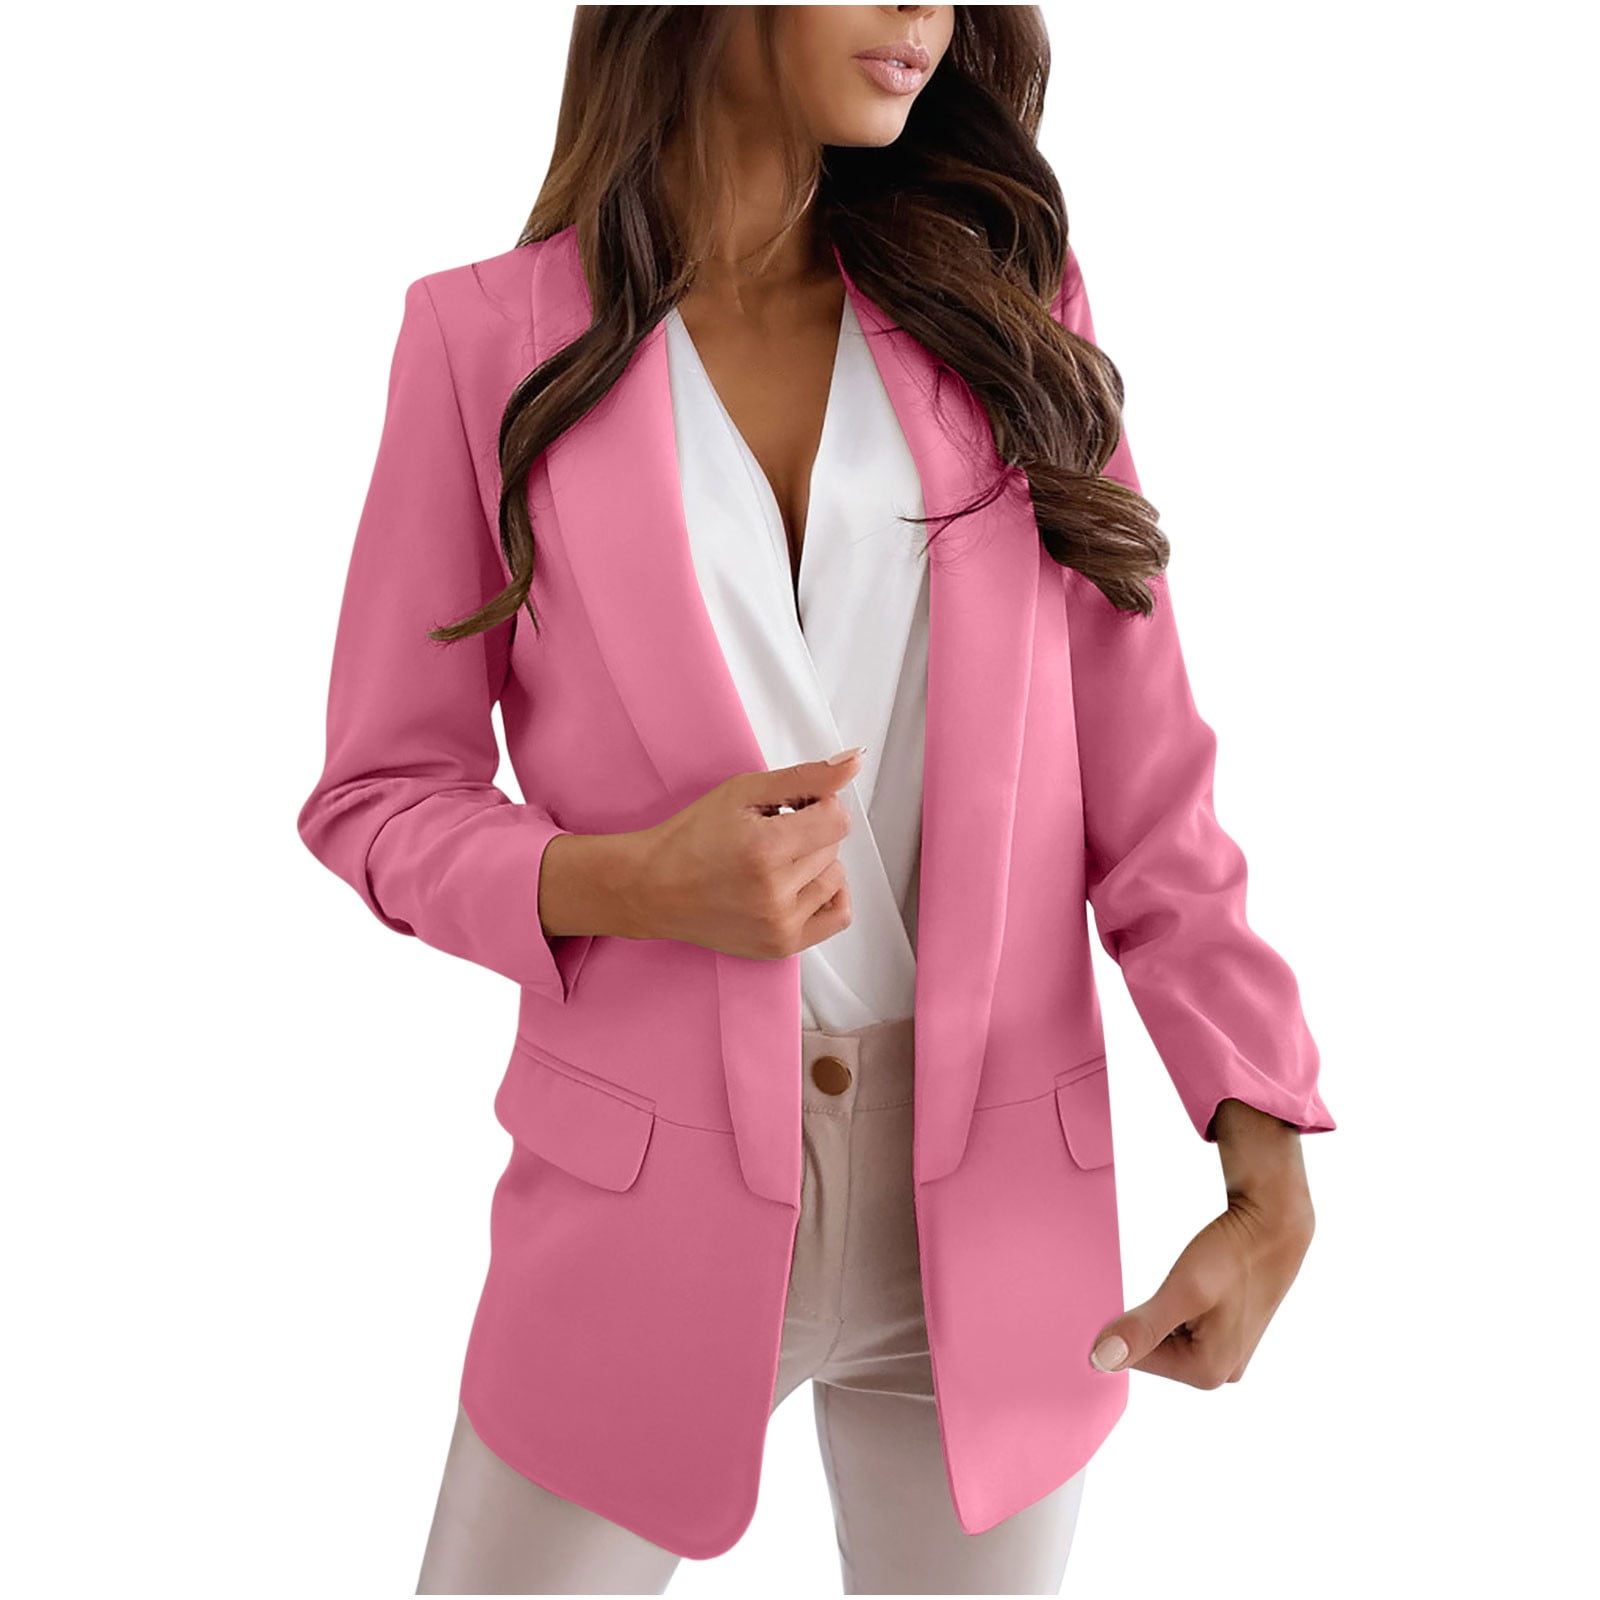 Women's Gray Blazers - Suit Jackets for Women - Express